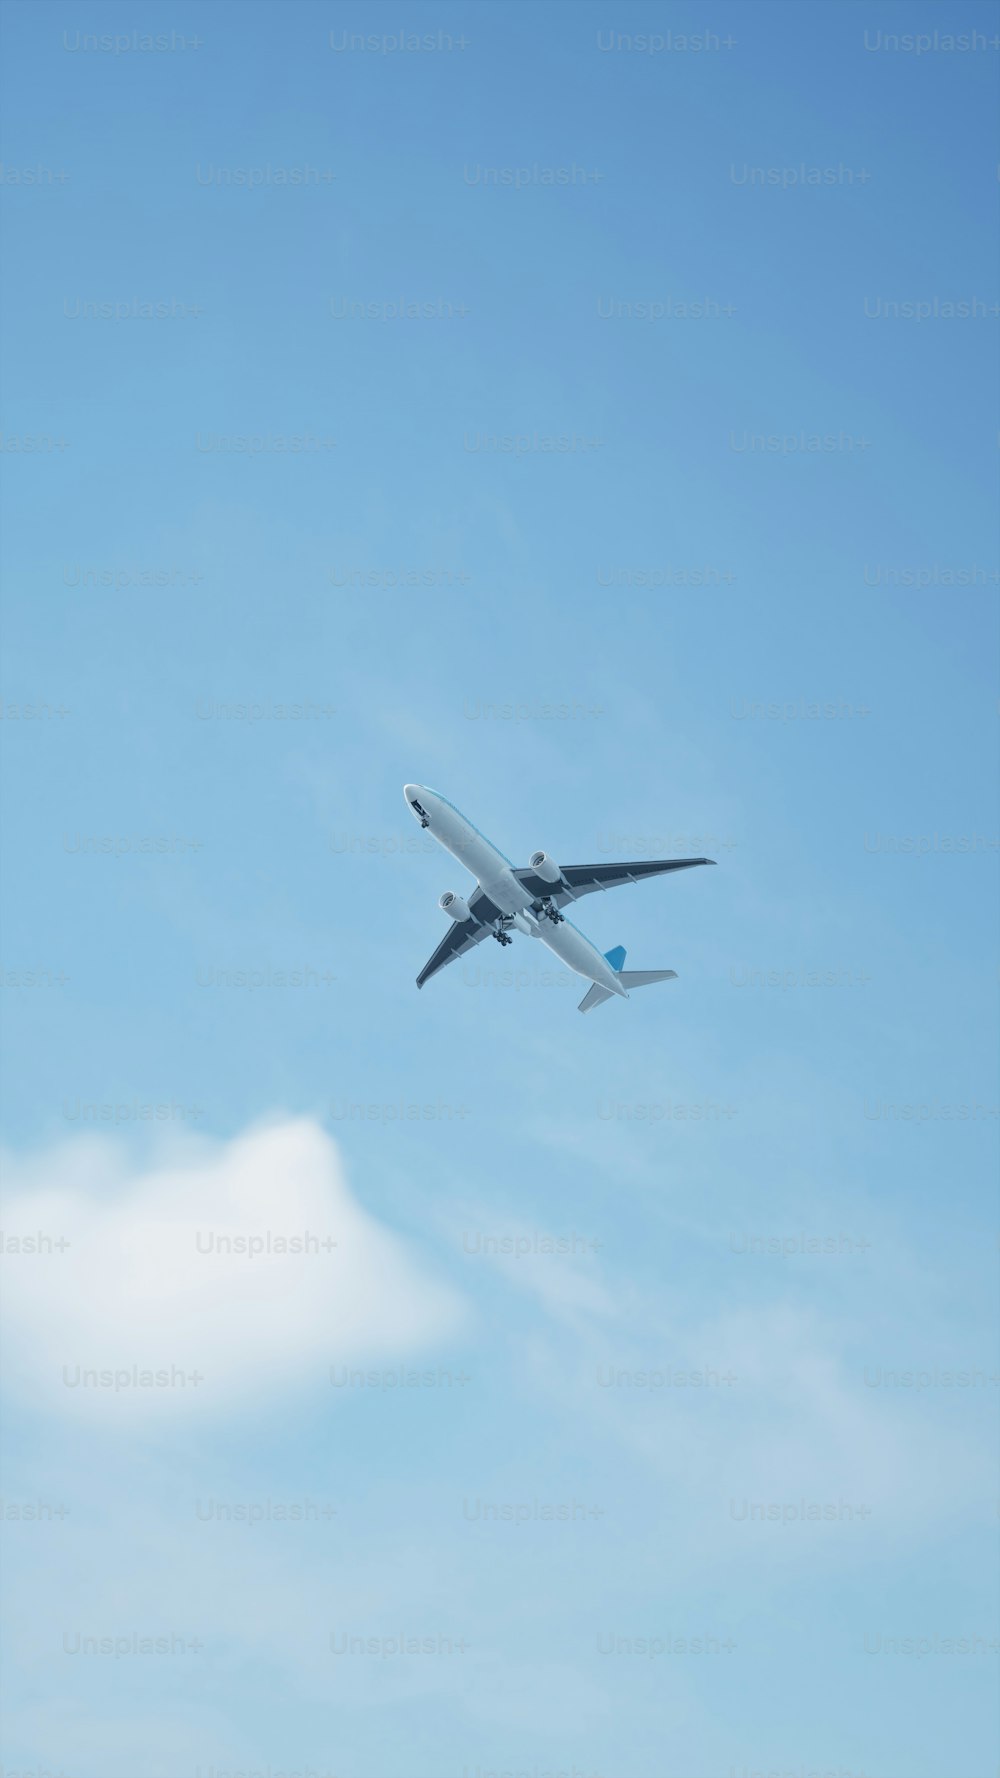 Un gros avion volant dans un ciel bleu